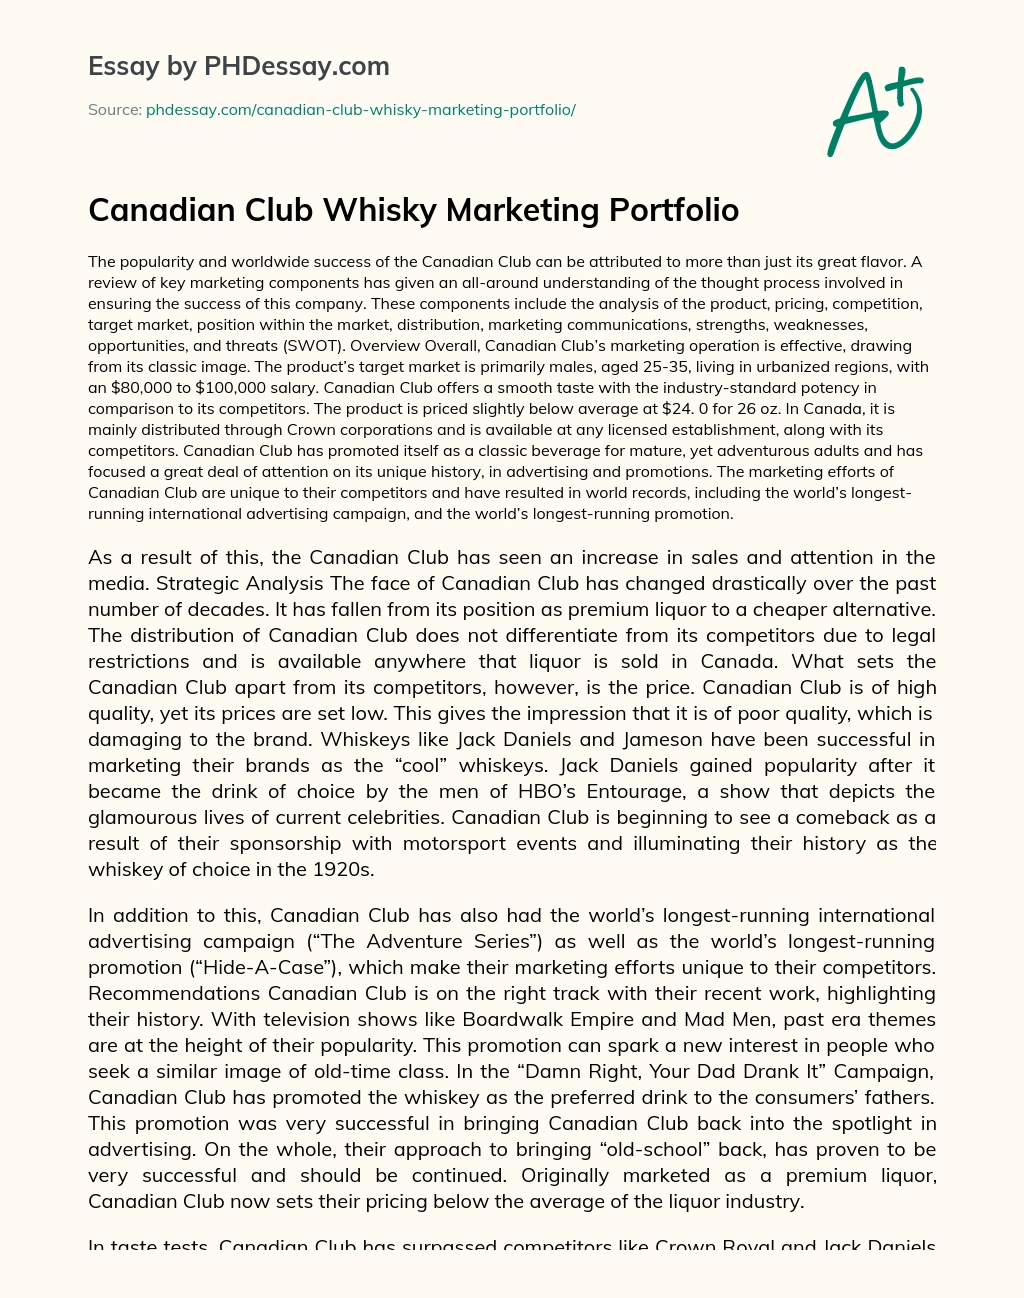 Canadian Club Whisky Marketing Portfolio essay